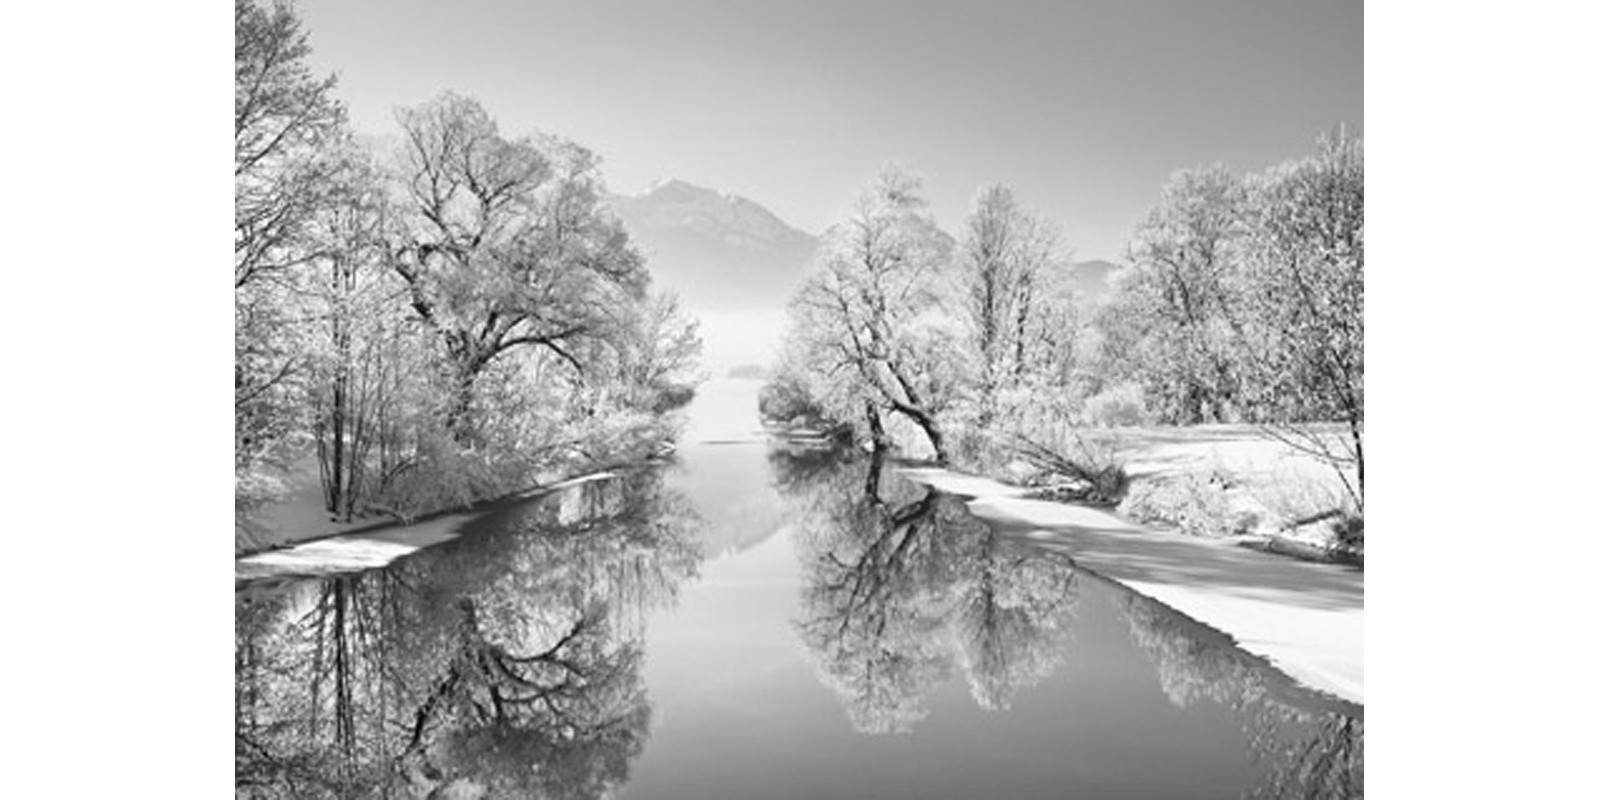 FRANK KRAHMER - Winter landscape at Loisach, Germany (BW)